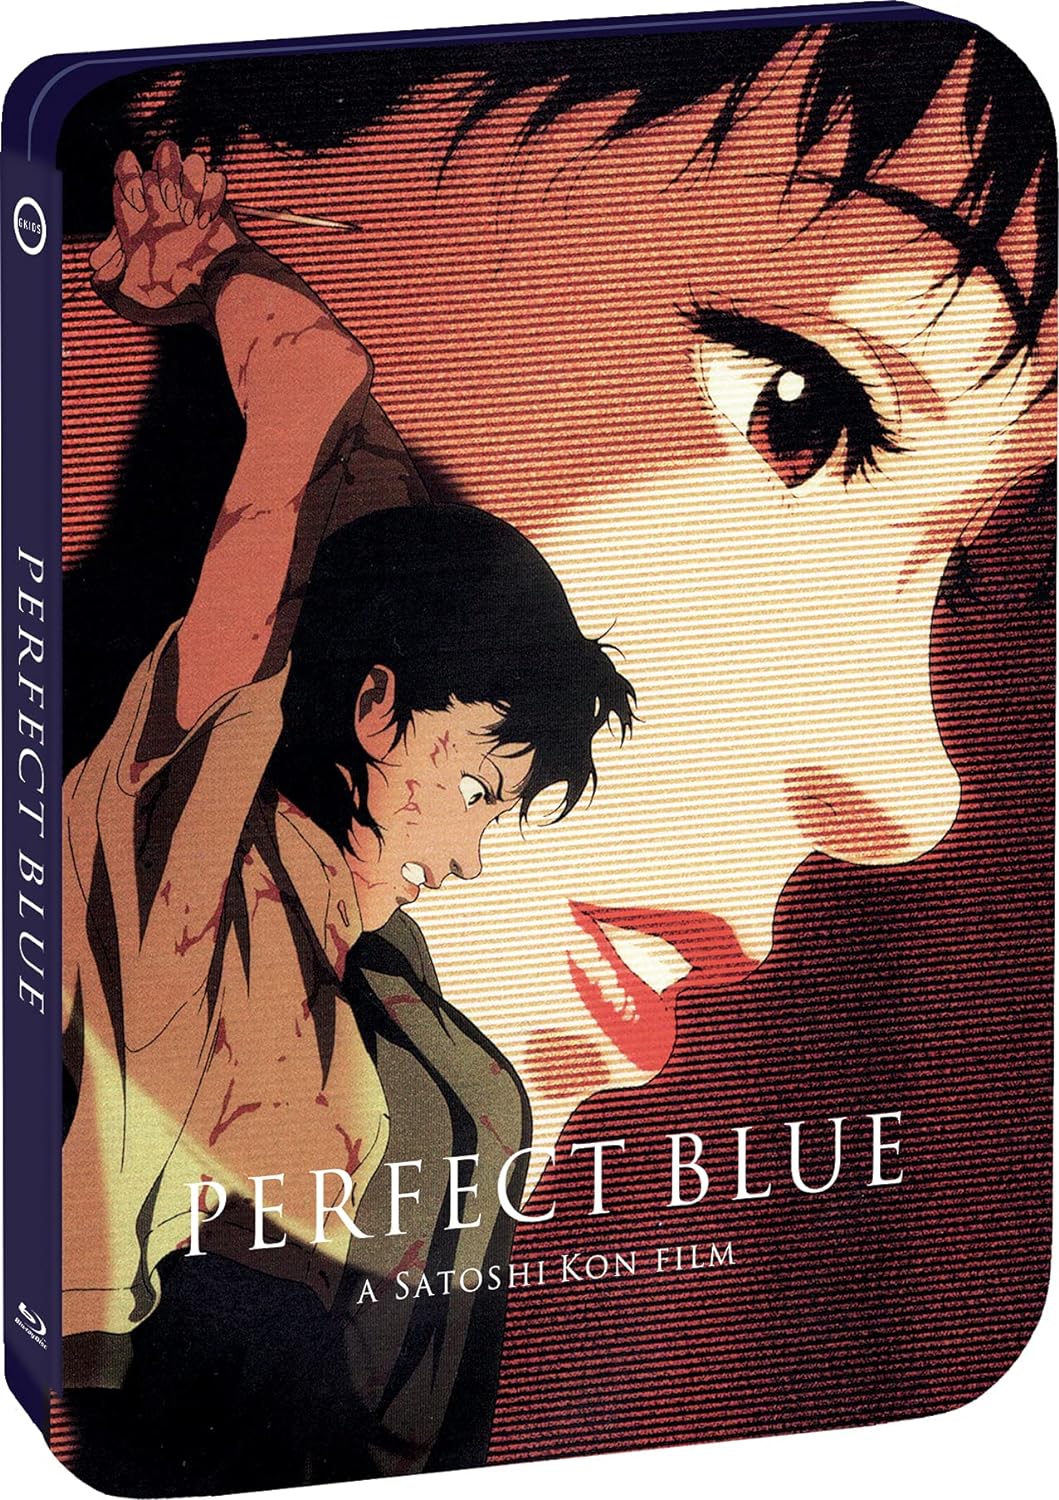 Perfect Blue: A Satoshi Kon Film (Limited Edition Steelbook/Blu-Ray + DVD) $17.99 via Amazon